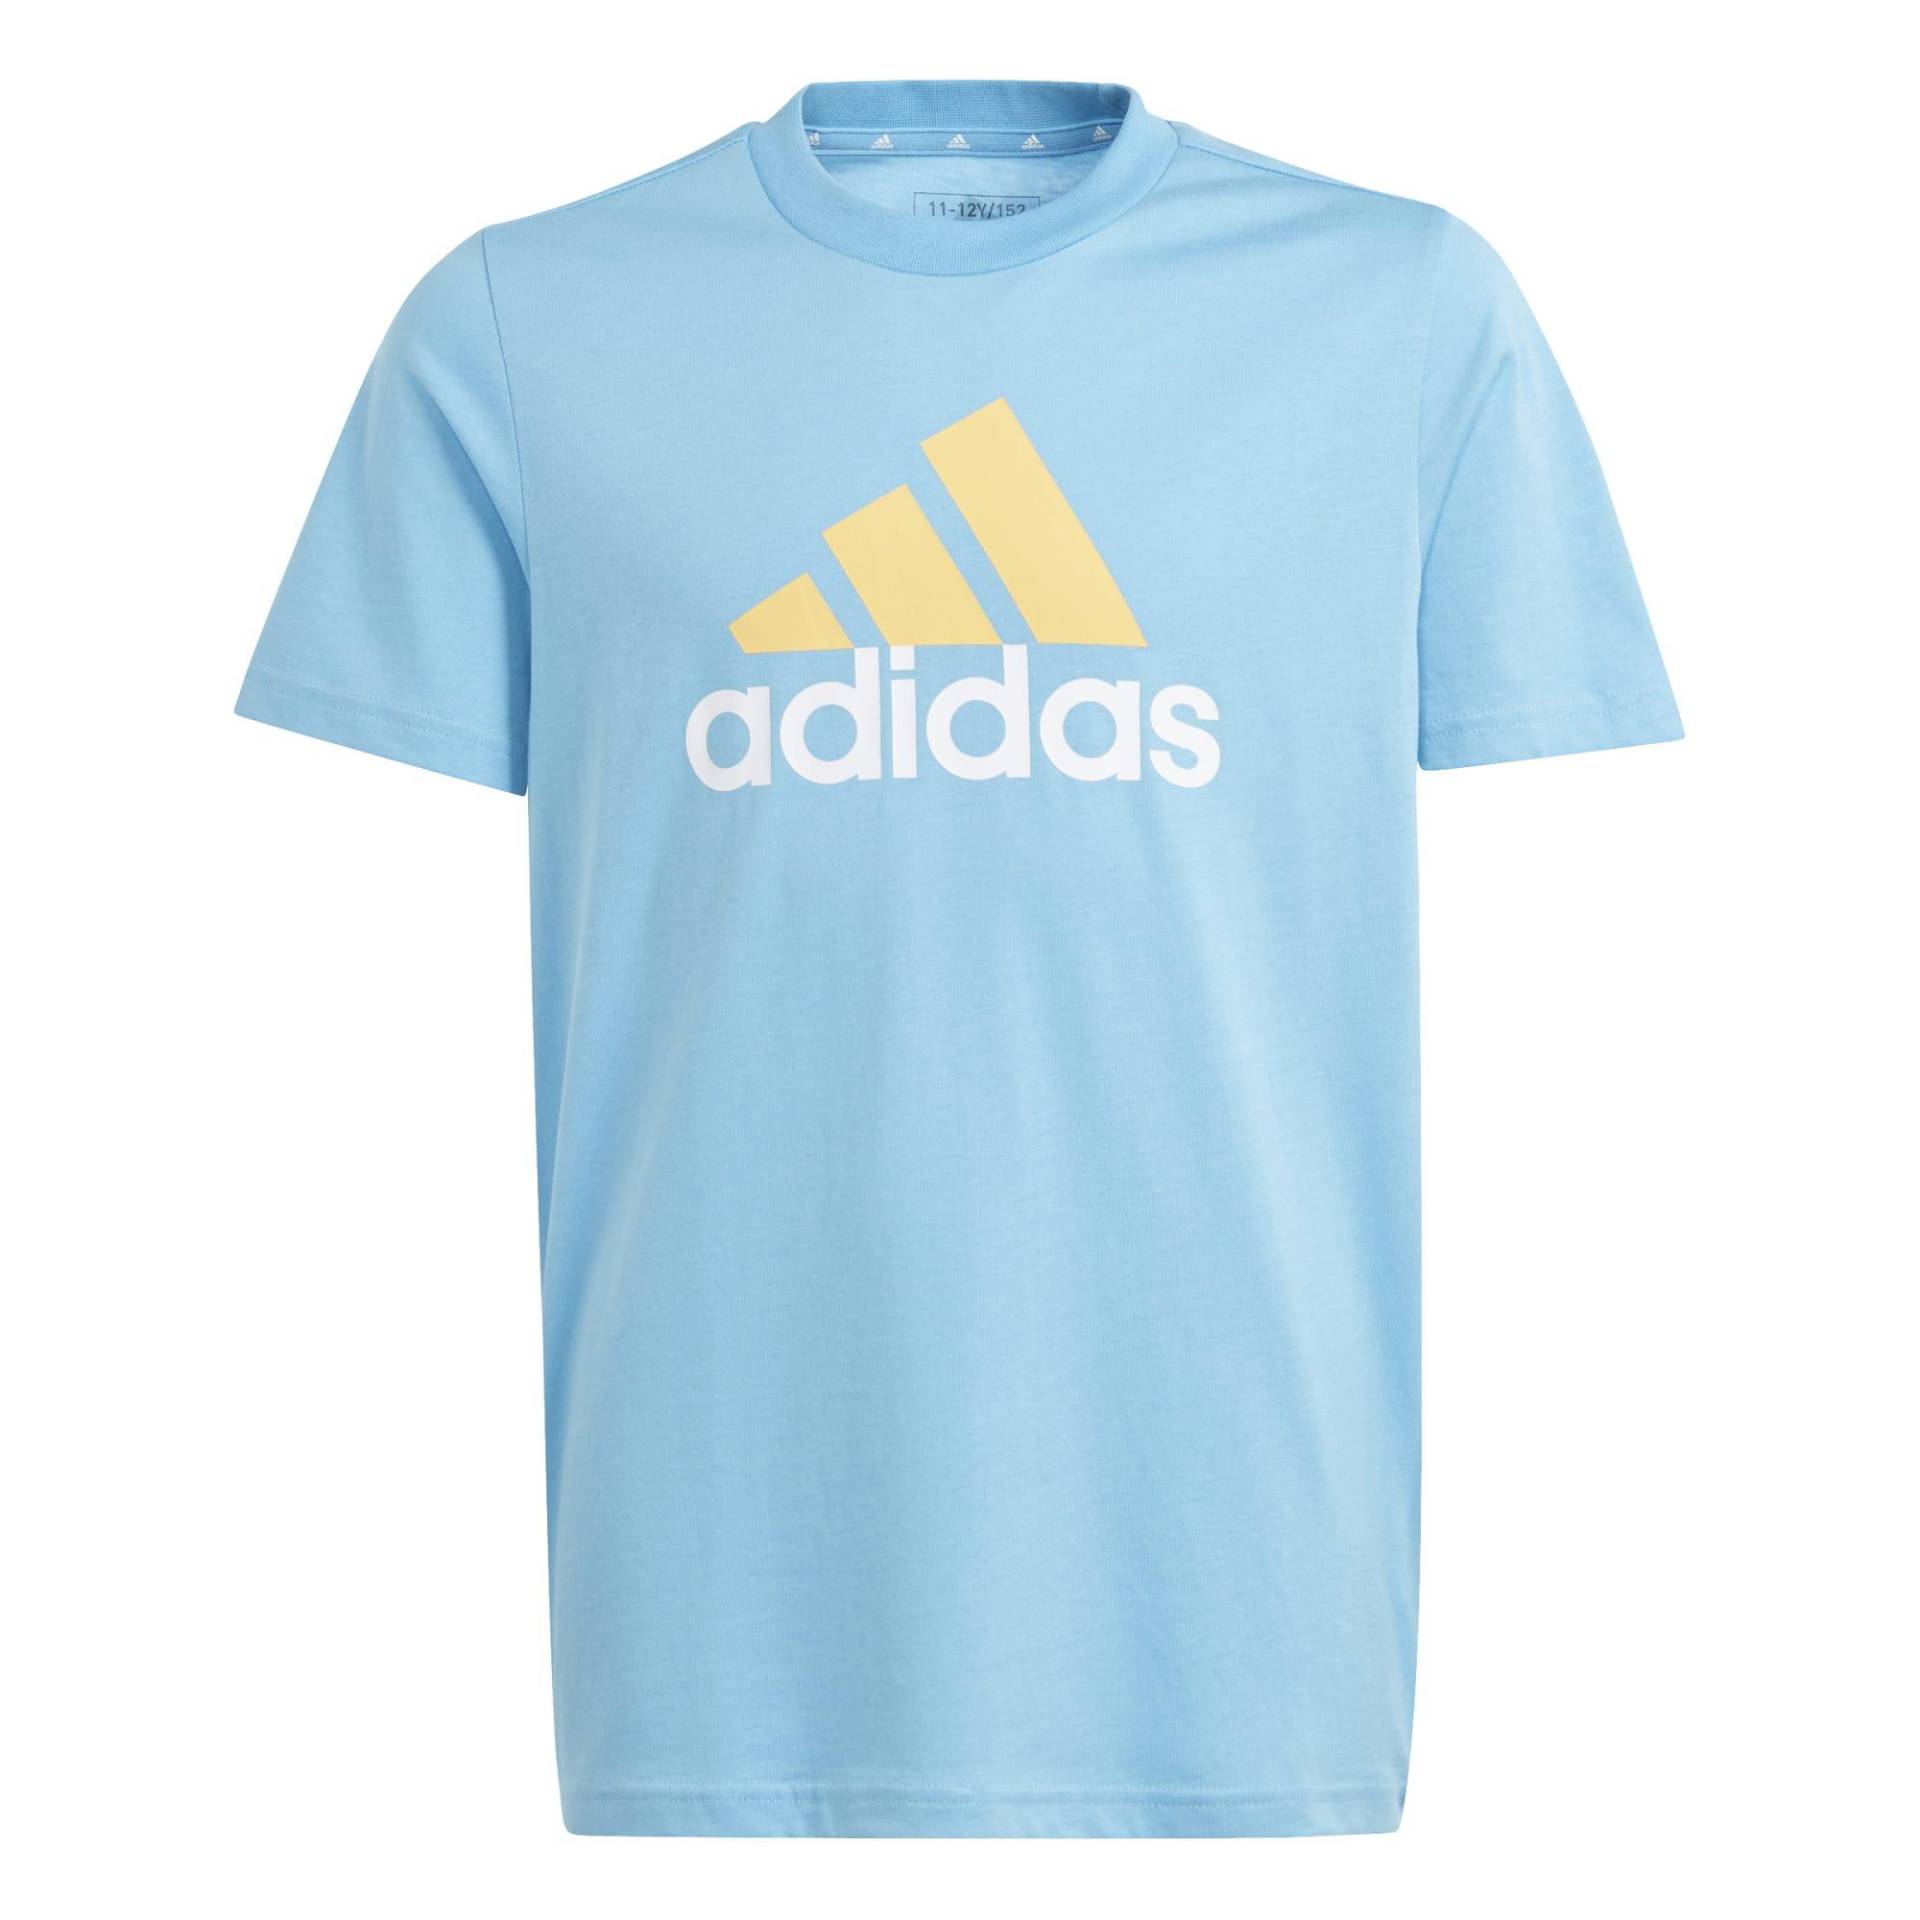 ADIDAS T-Shirt Kinder - blau von Adidas